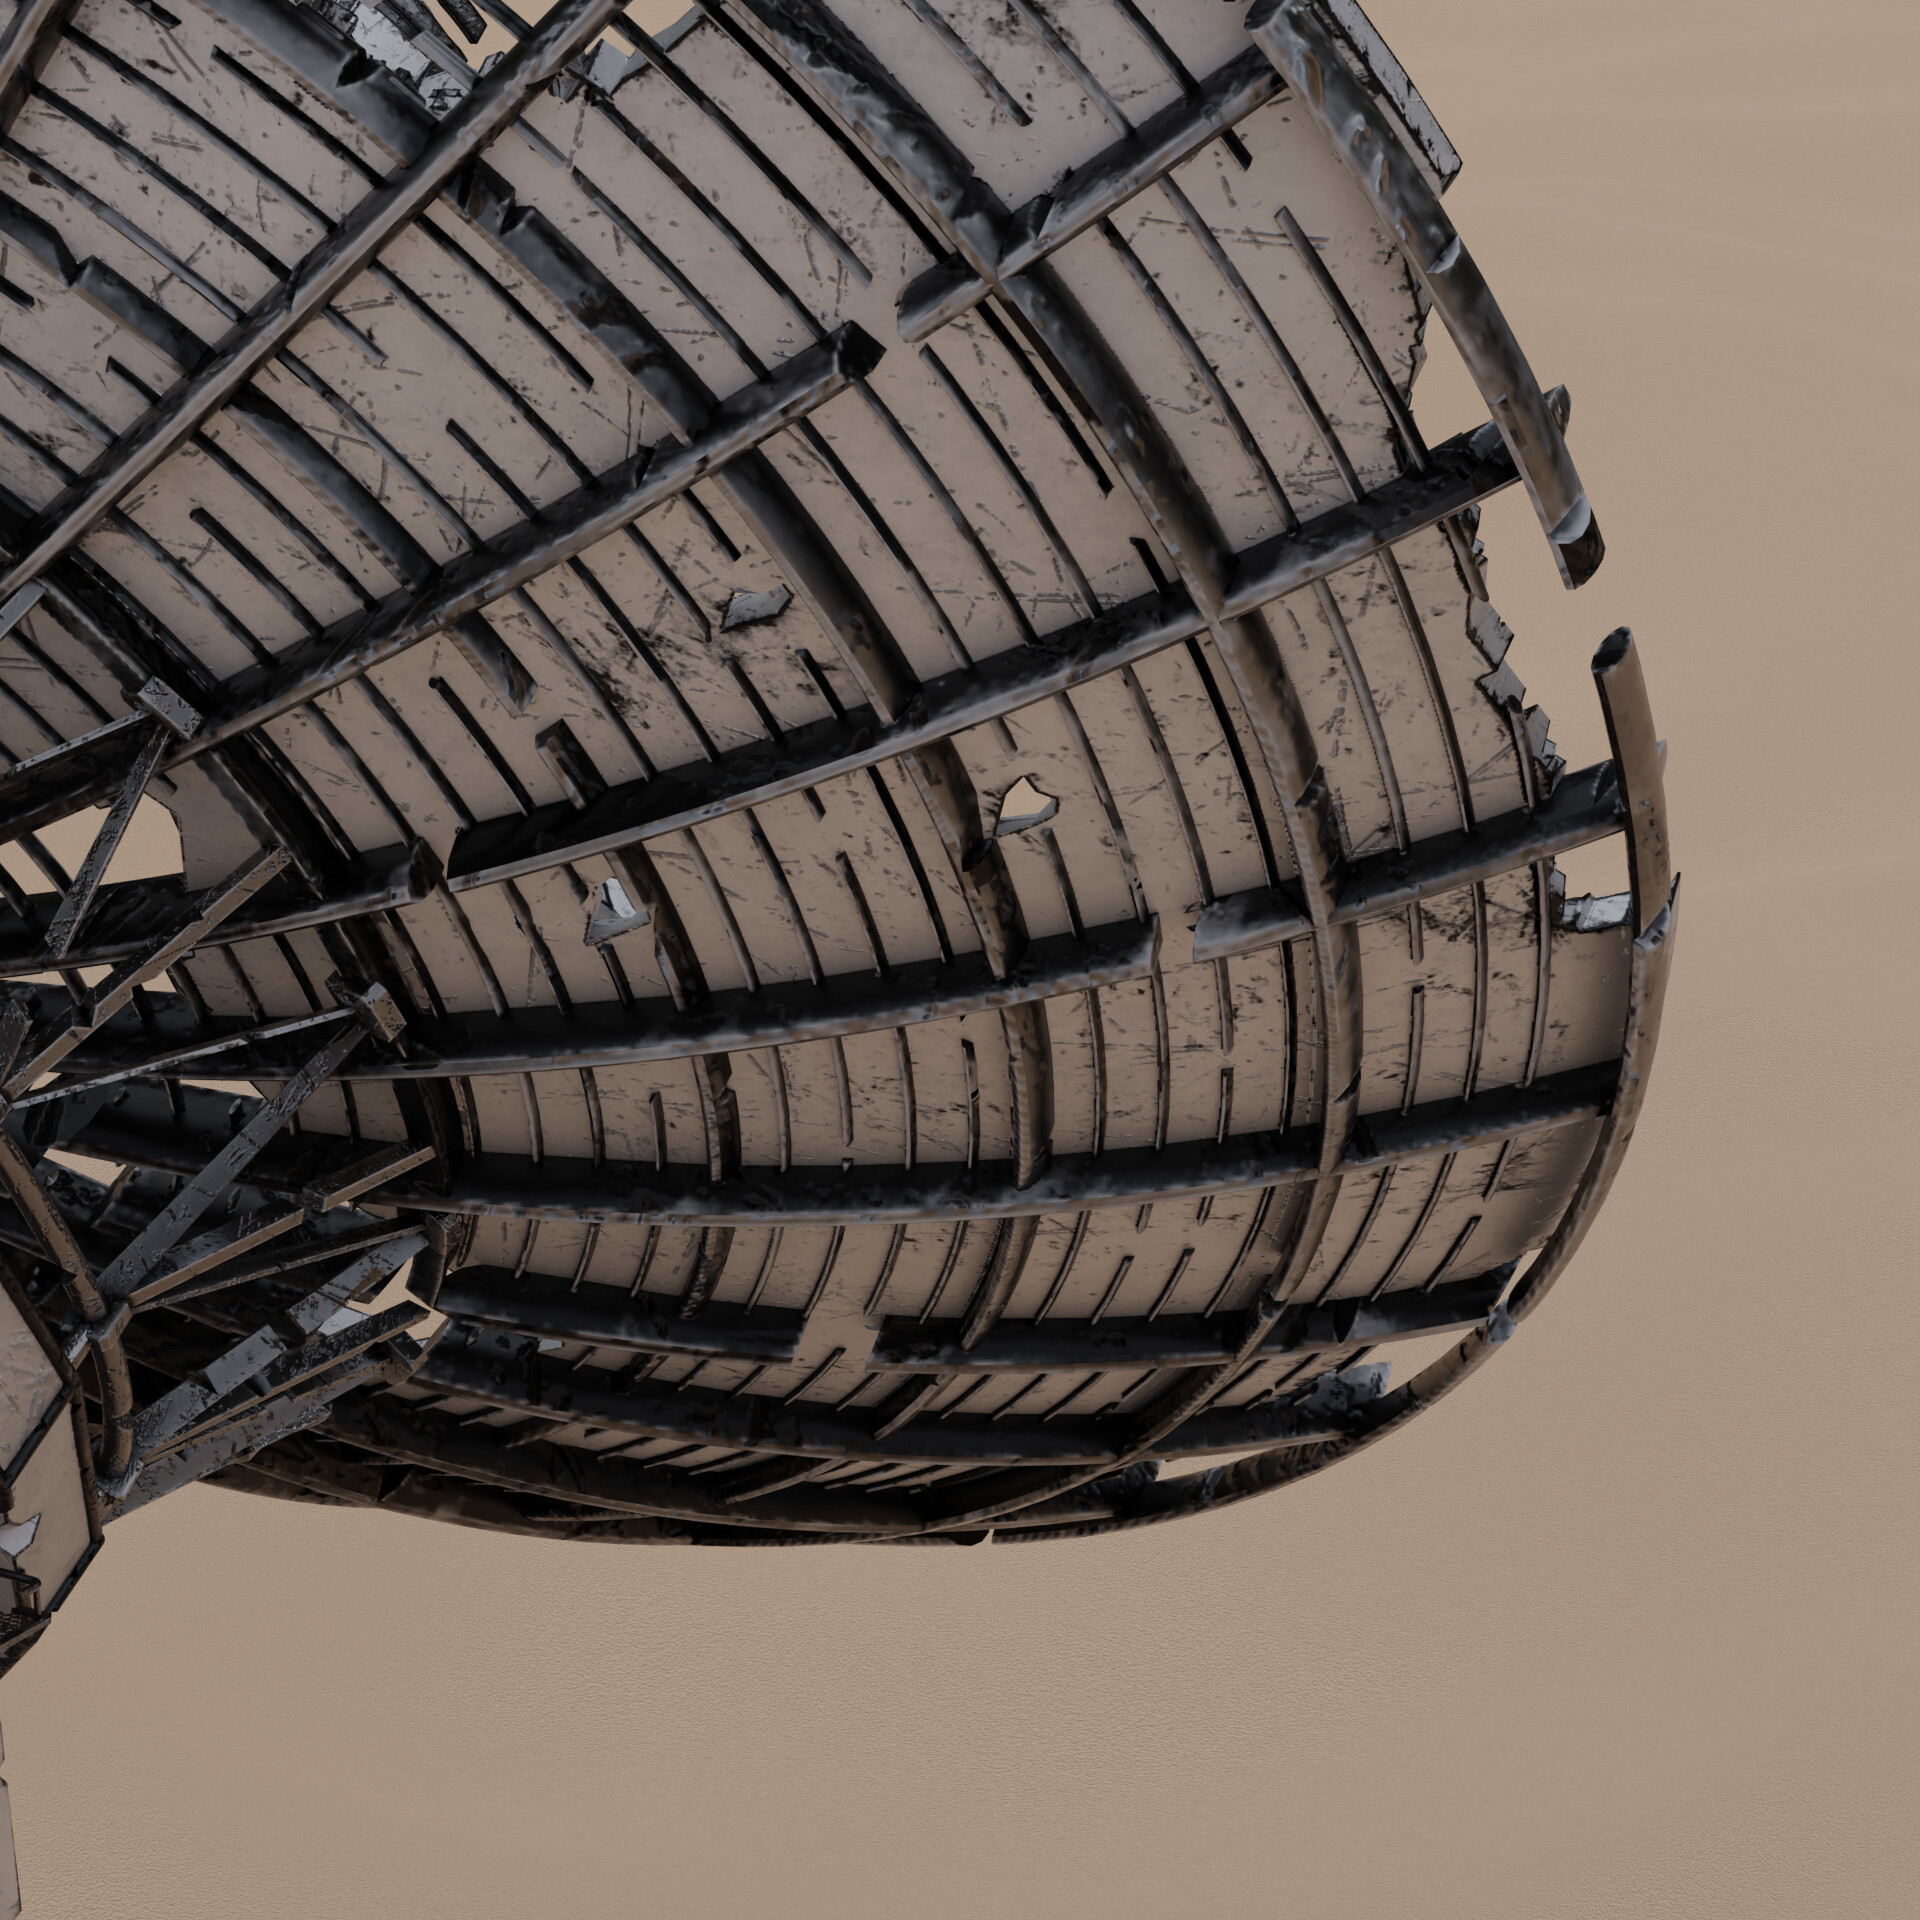 Satellite dish rust как летать фото 100